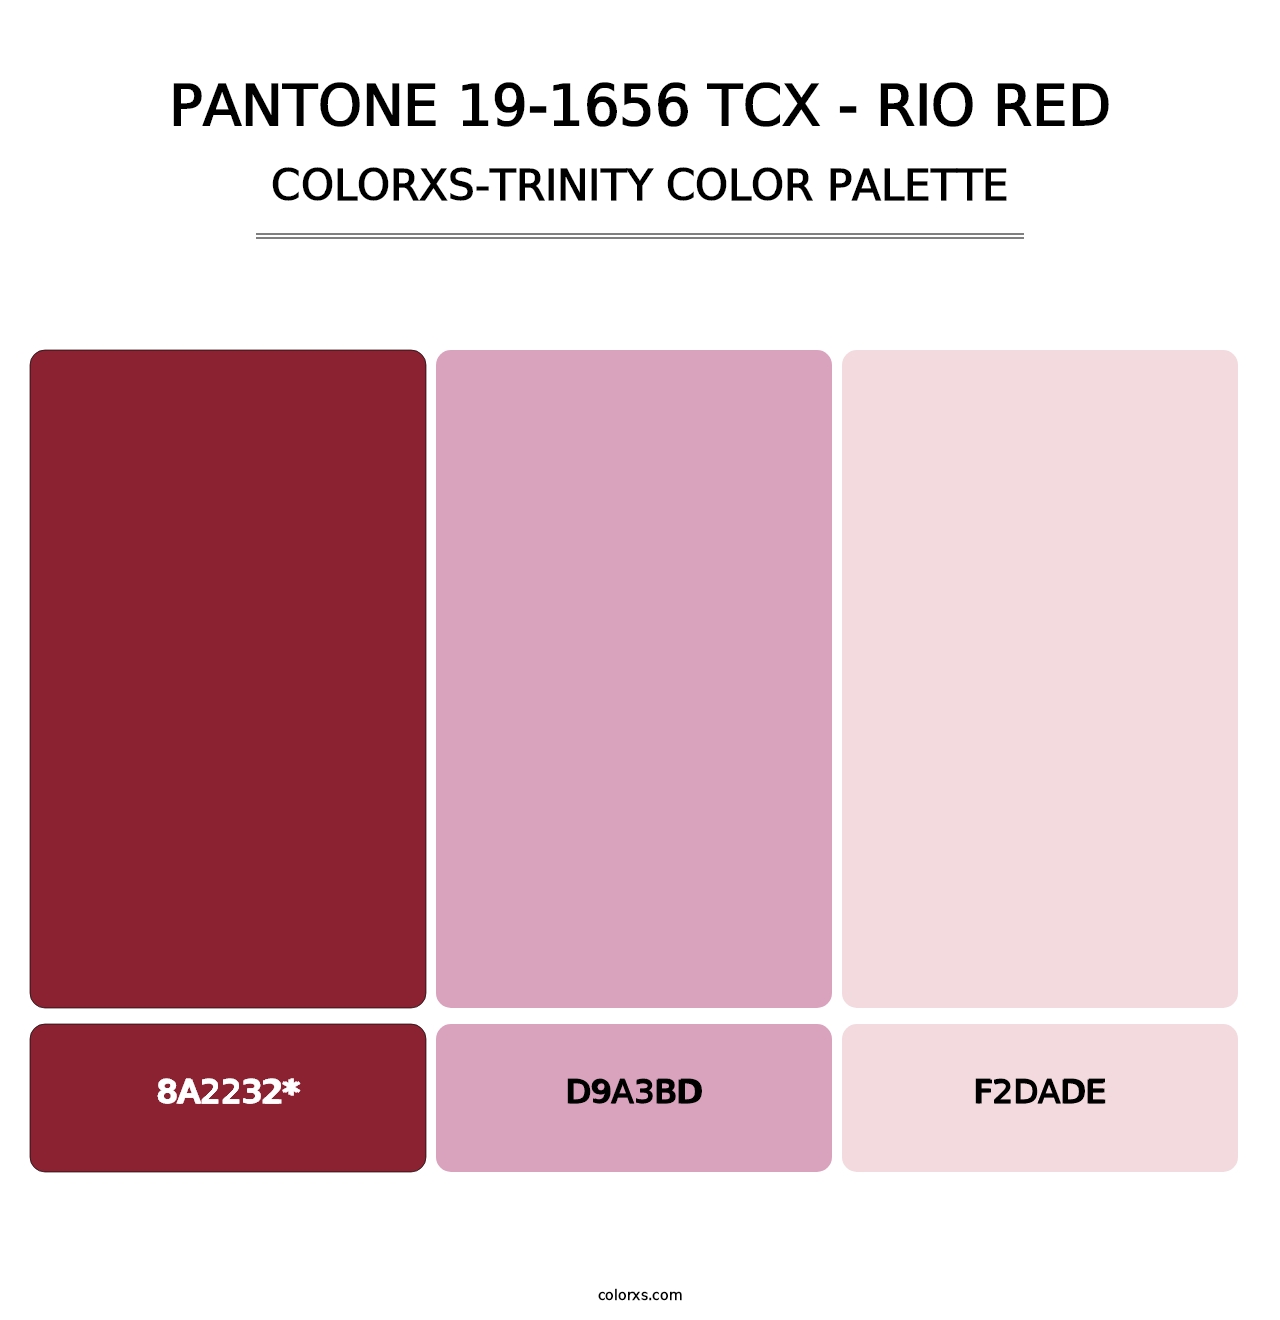 PANTONE 19-1656 TCX - Rio Red - Colorxs Trinity Palette